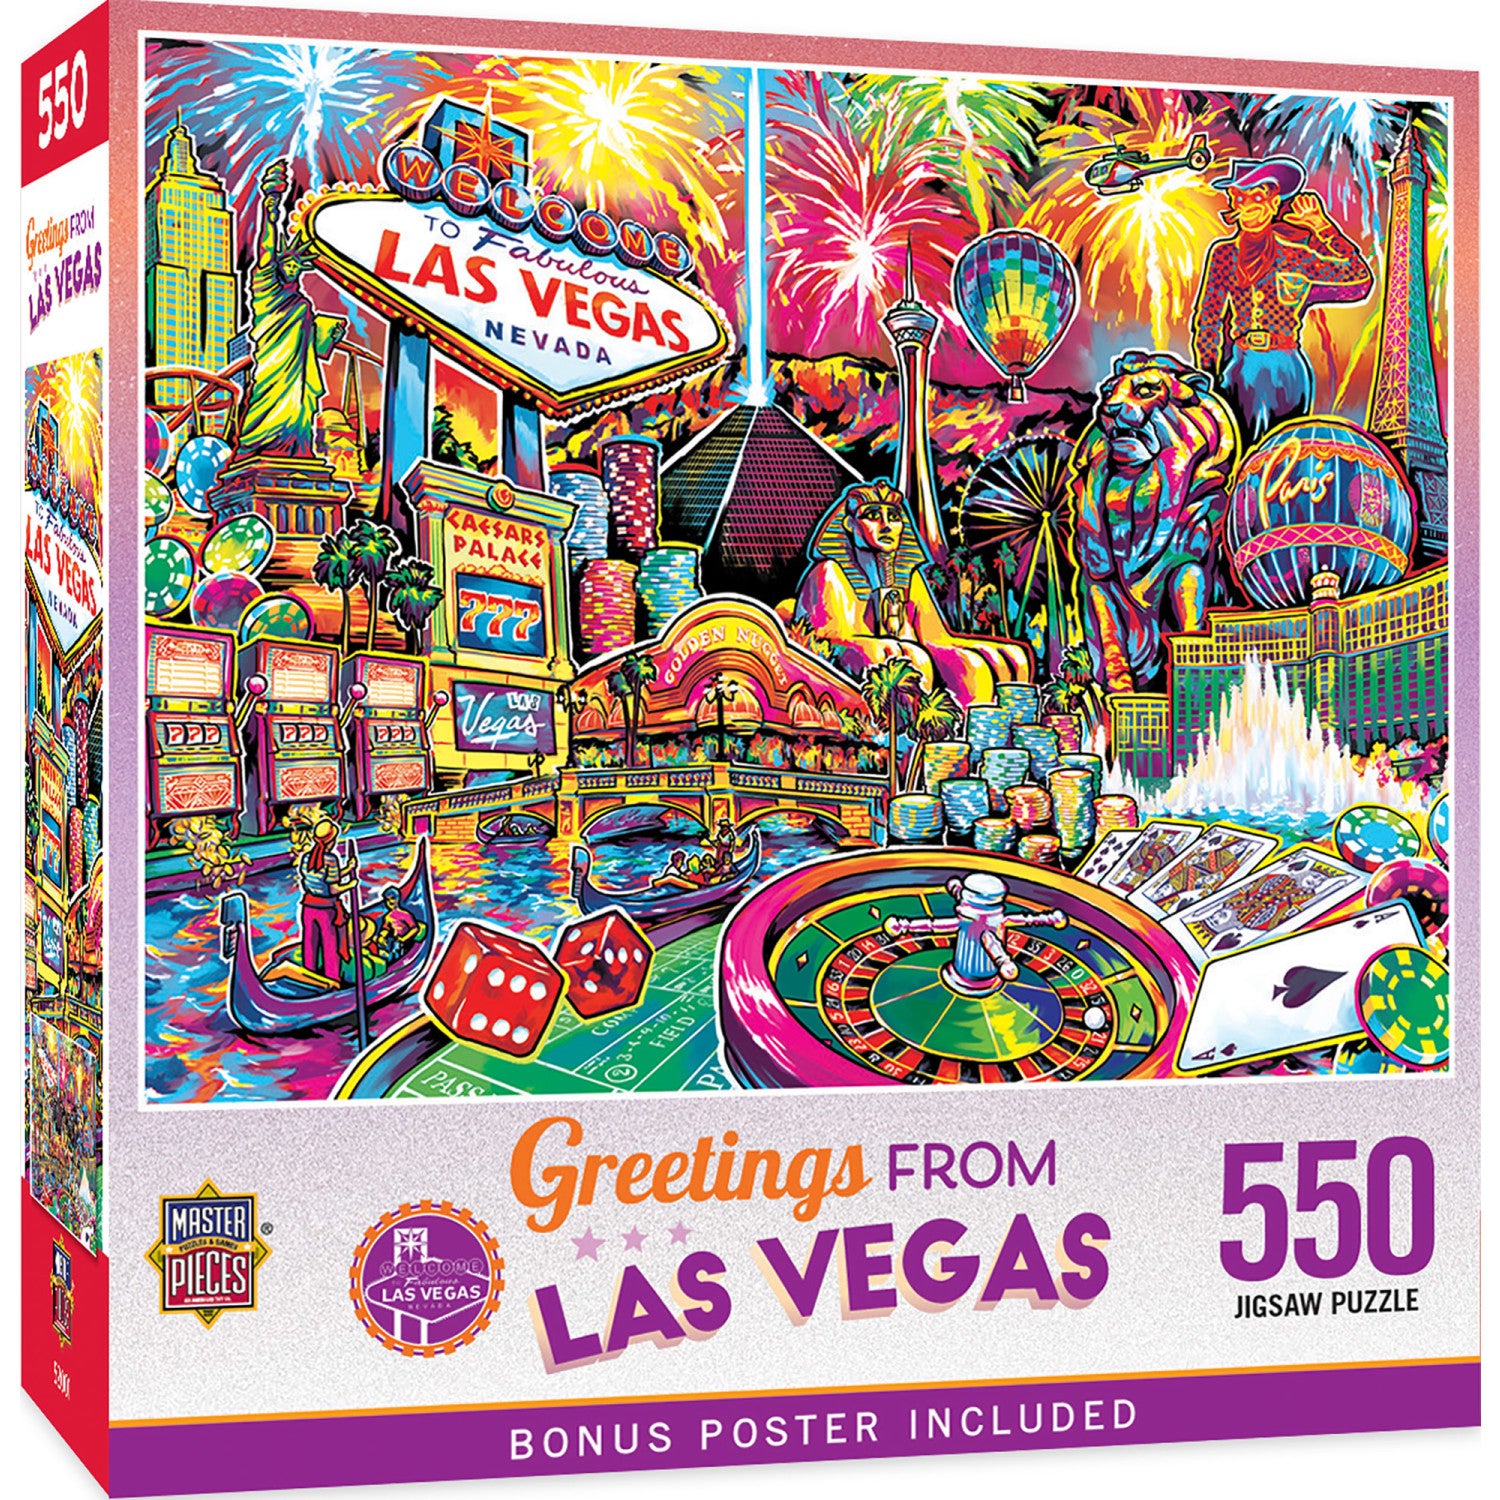 Greetings From - Las Vegas 550 Piece Puzzle